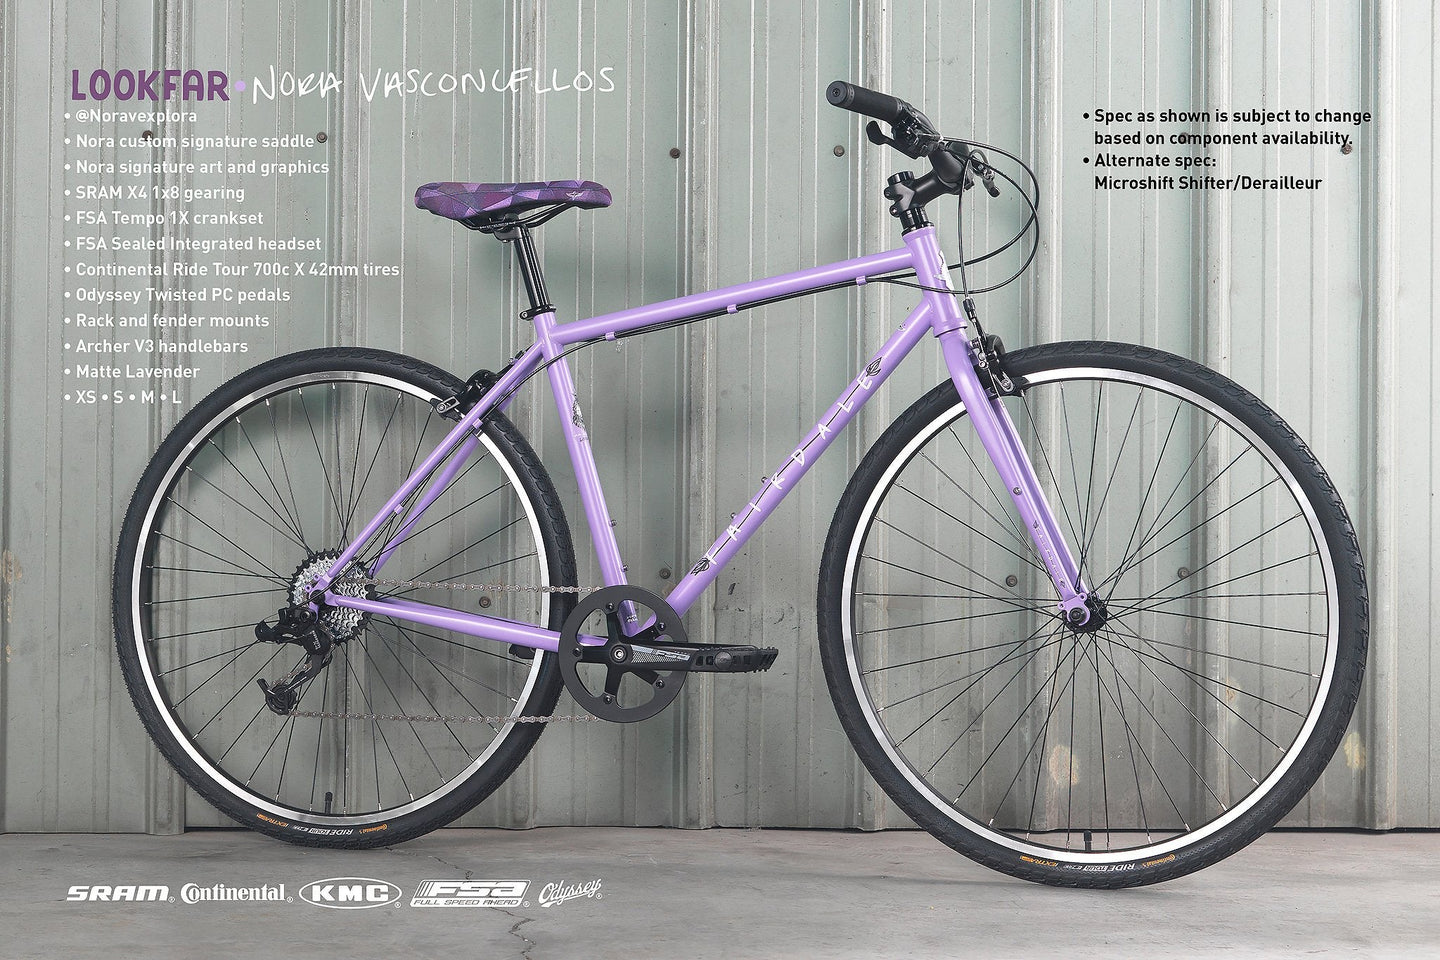 Fairdale - 2022 Nora X Lookfar Bike - Small